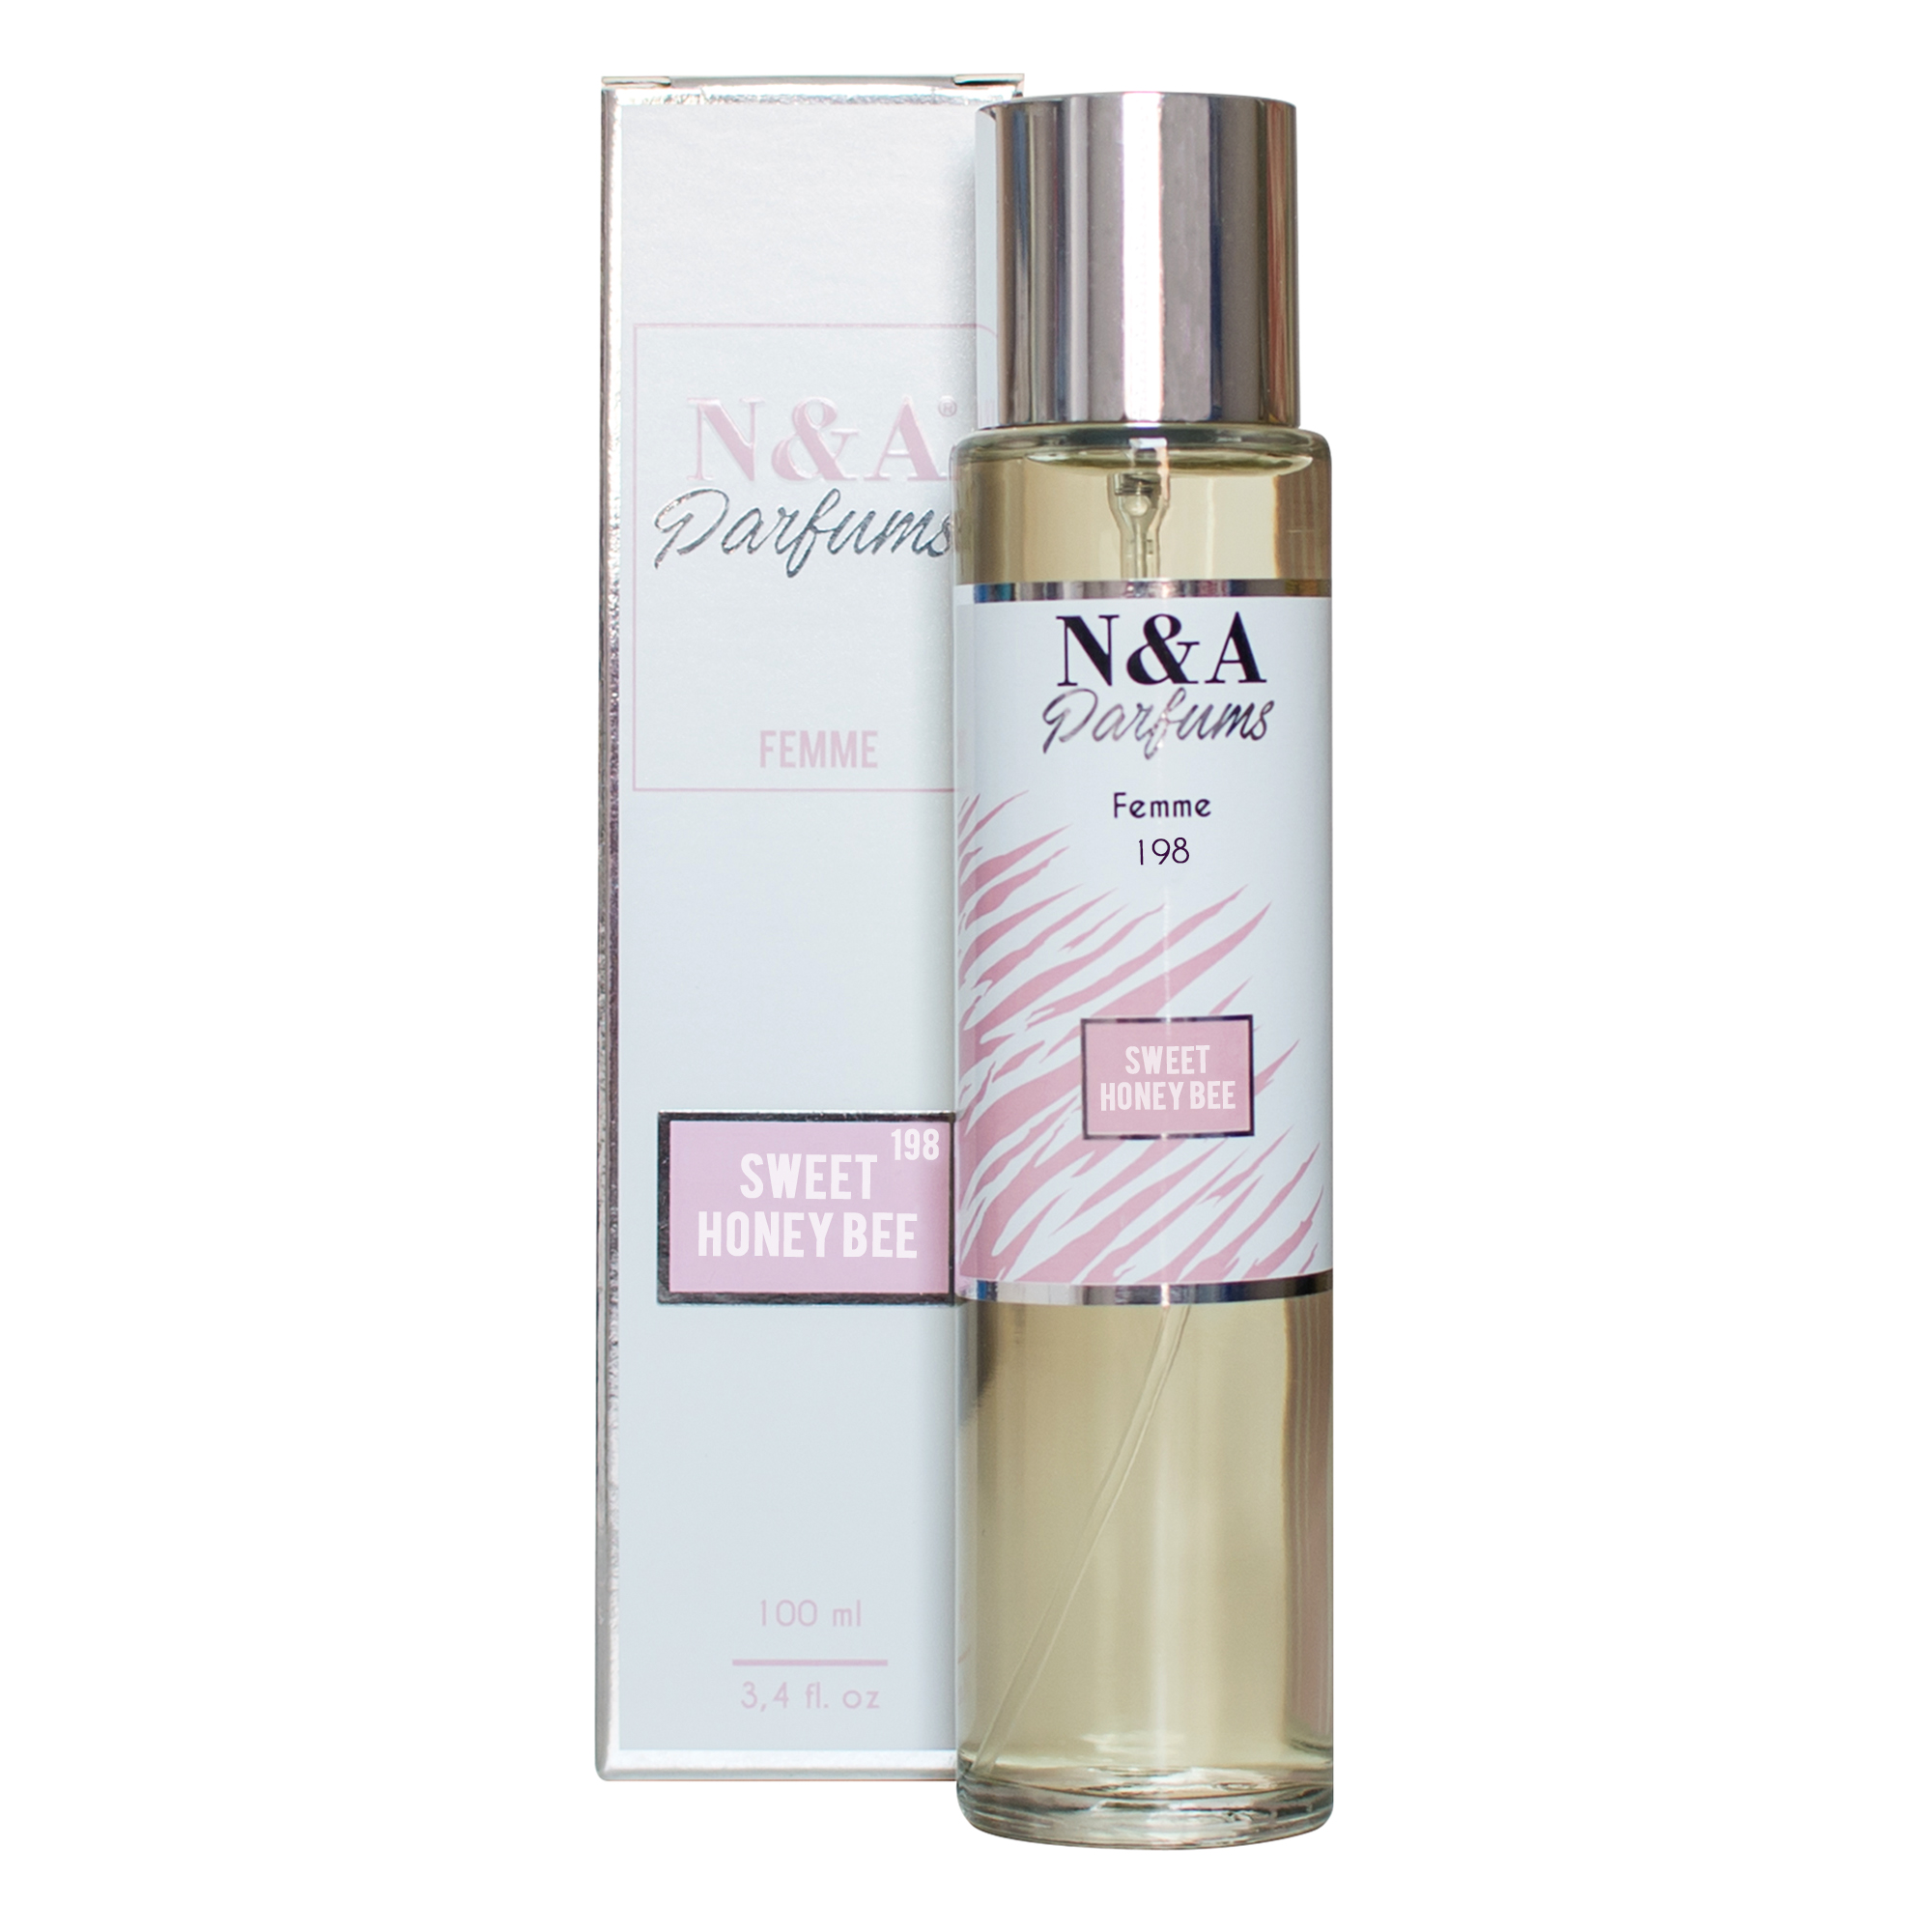  Perfume N&A 198 100ml - Se Gosta de SCANDAL JEAN PAUL GAULTIER experimente a Nossa Fragrância